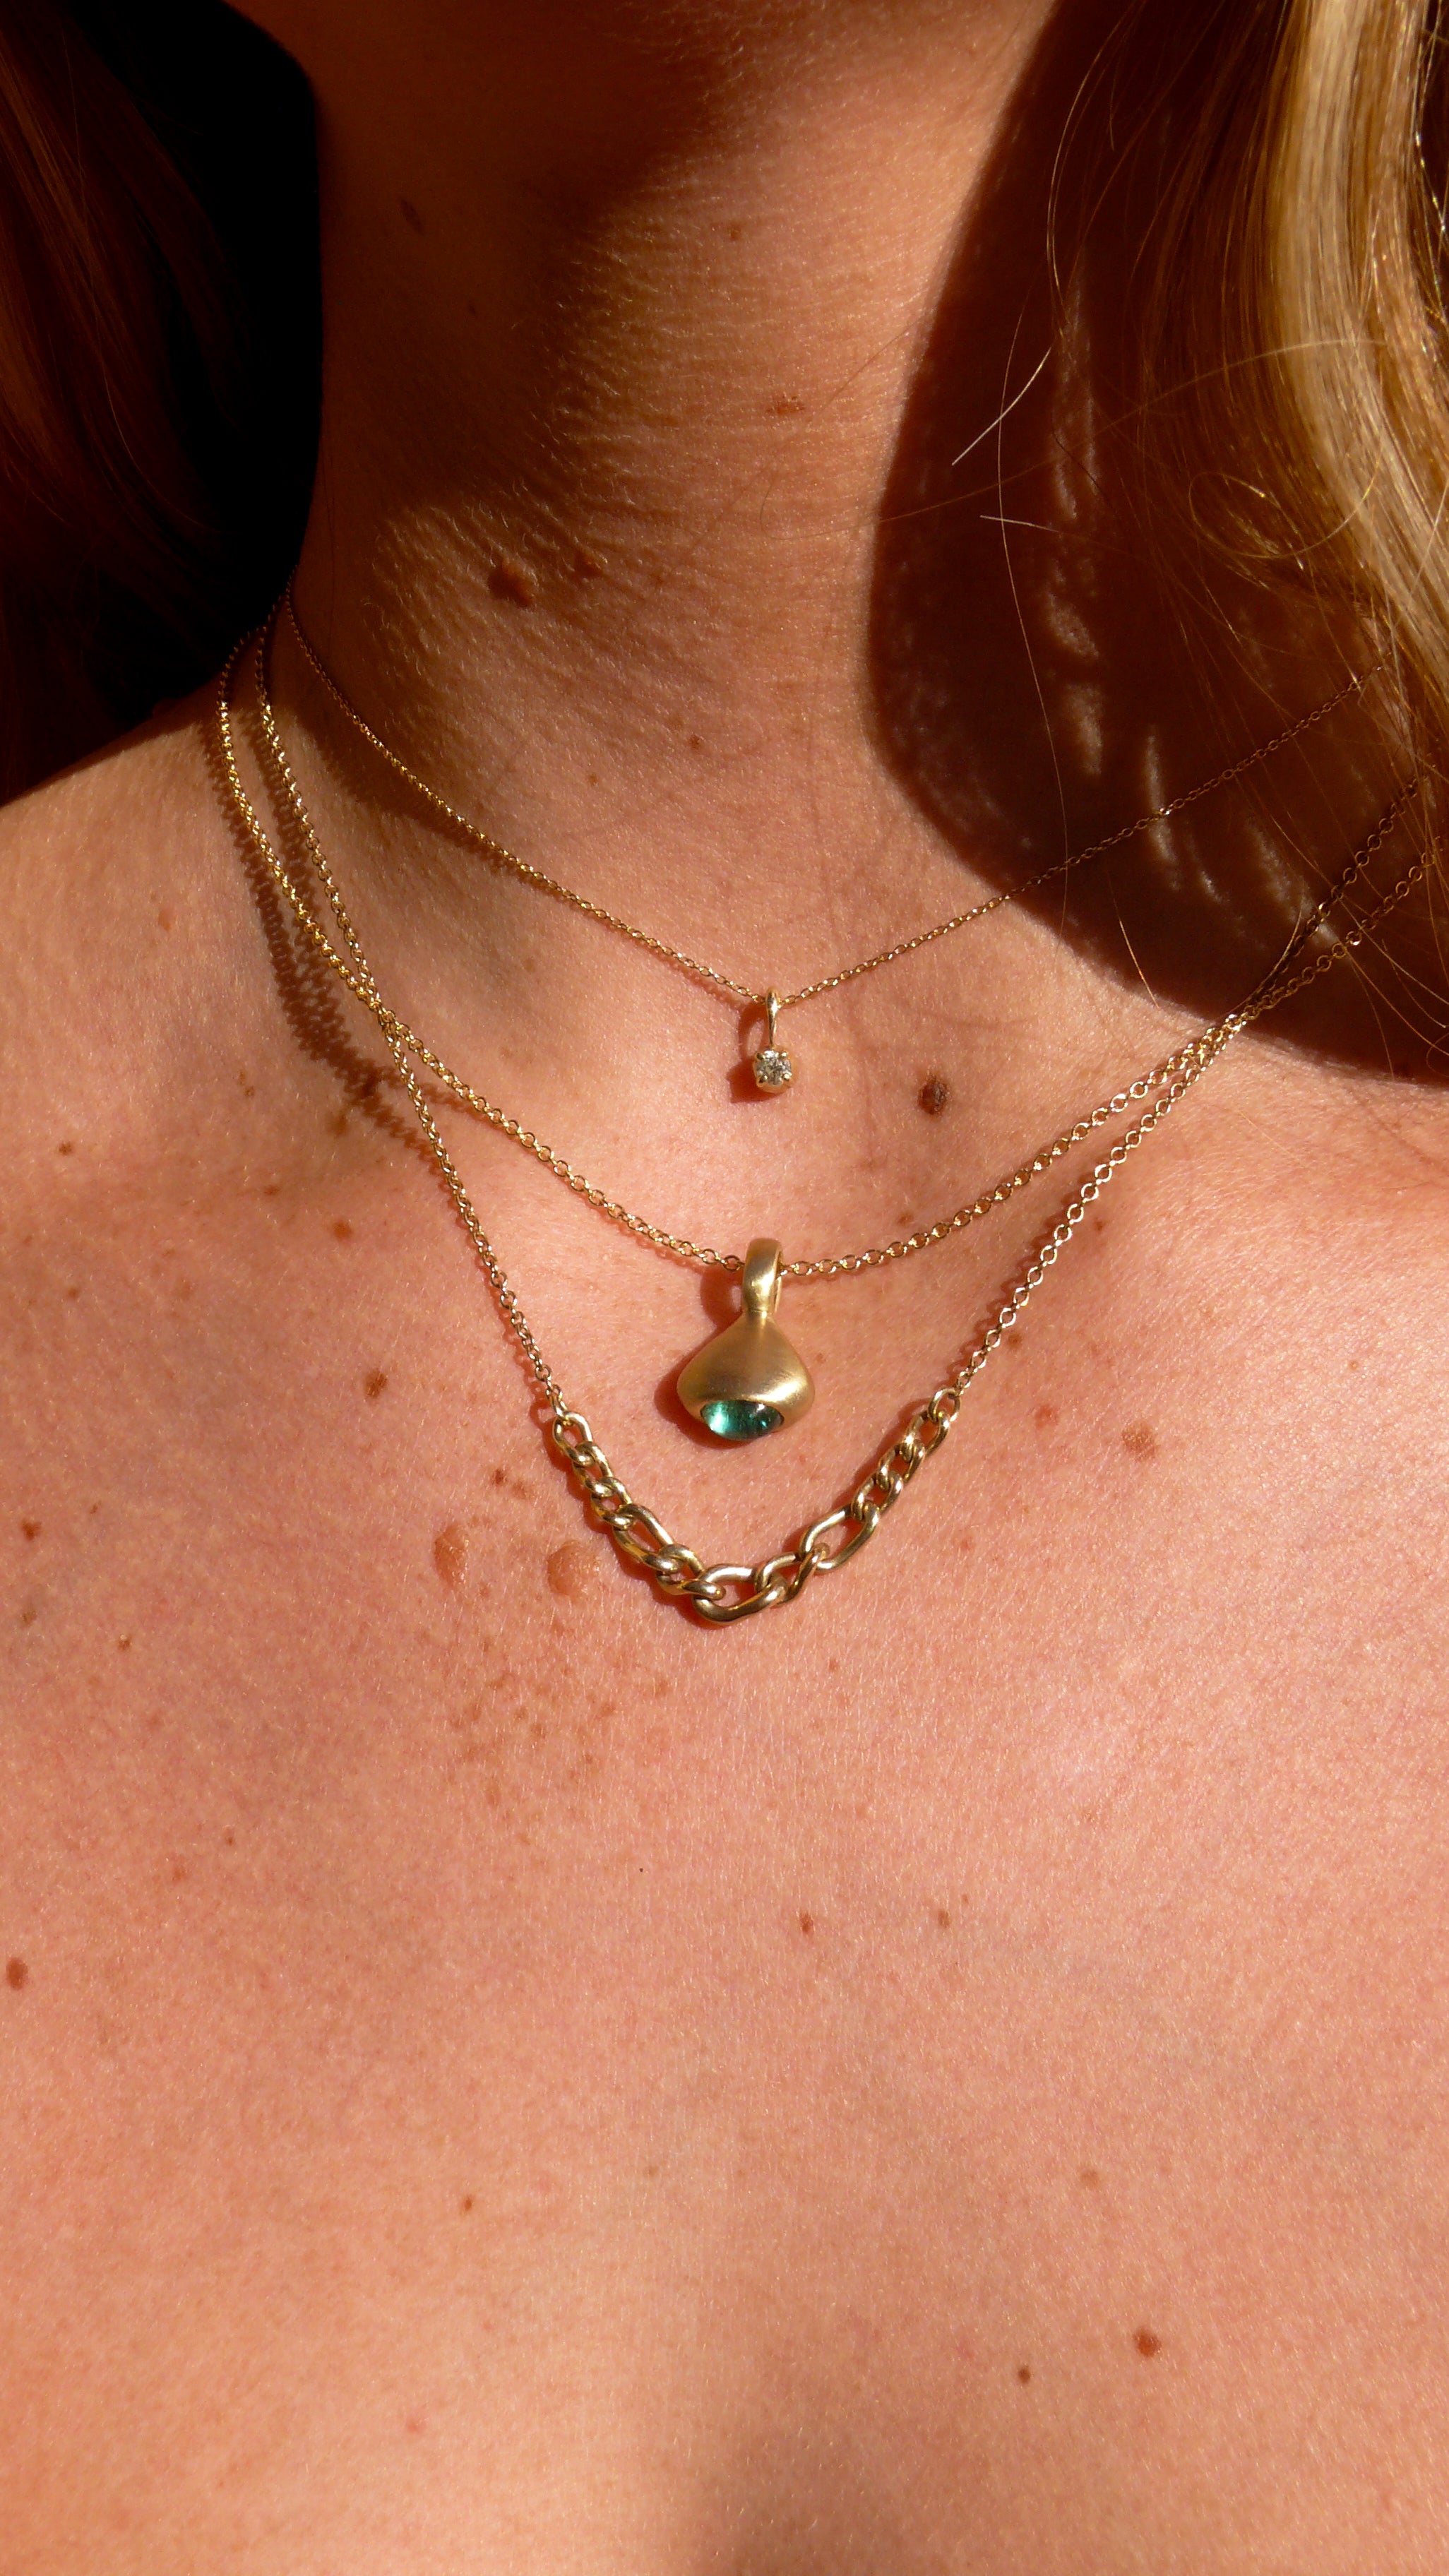 One-of-a-Kind Gold Teal Tourmaline Pendulum Charm No. 3, diamond blossom charm, graduated curb chain necklace on model